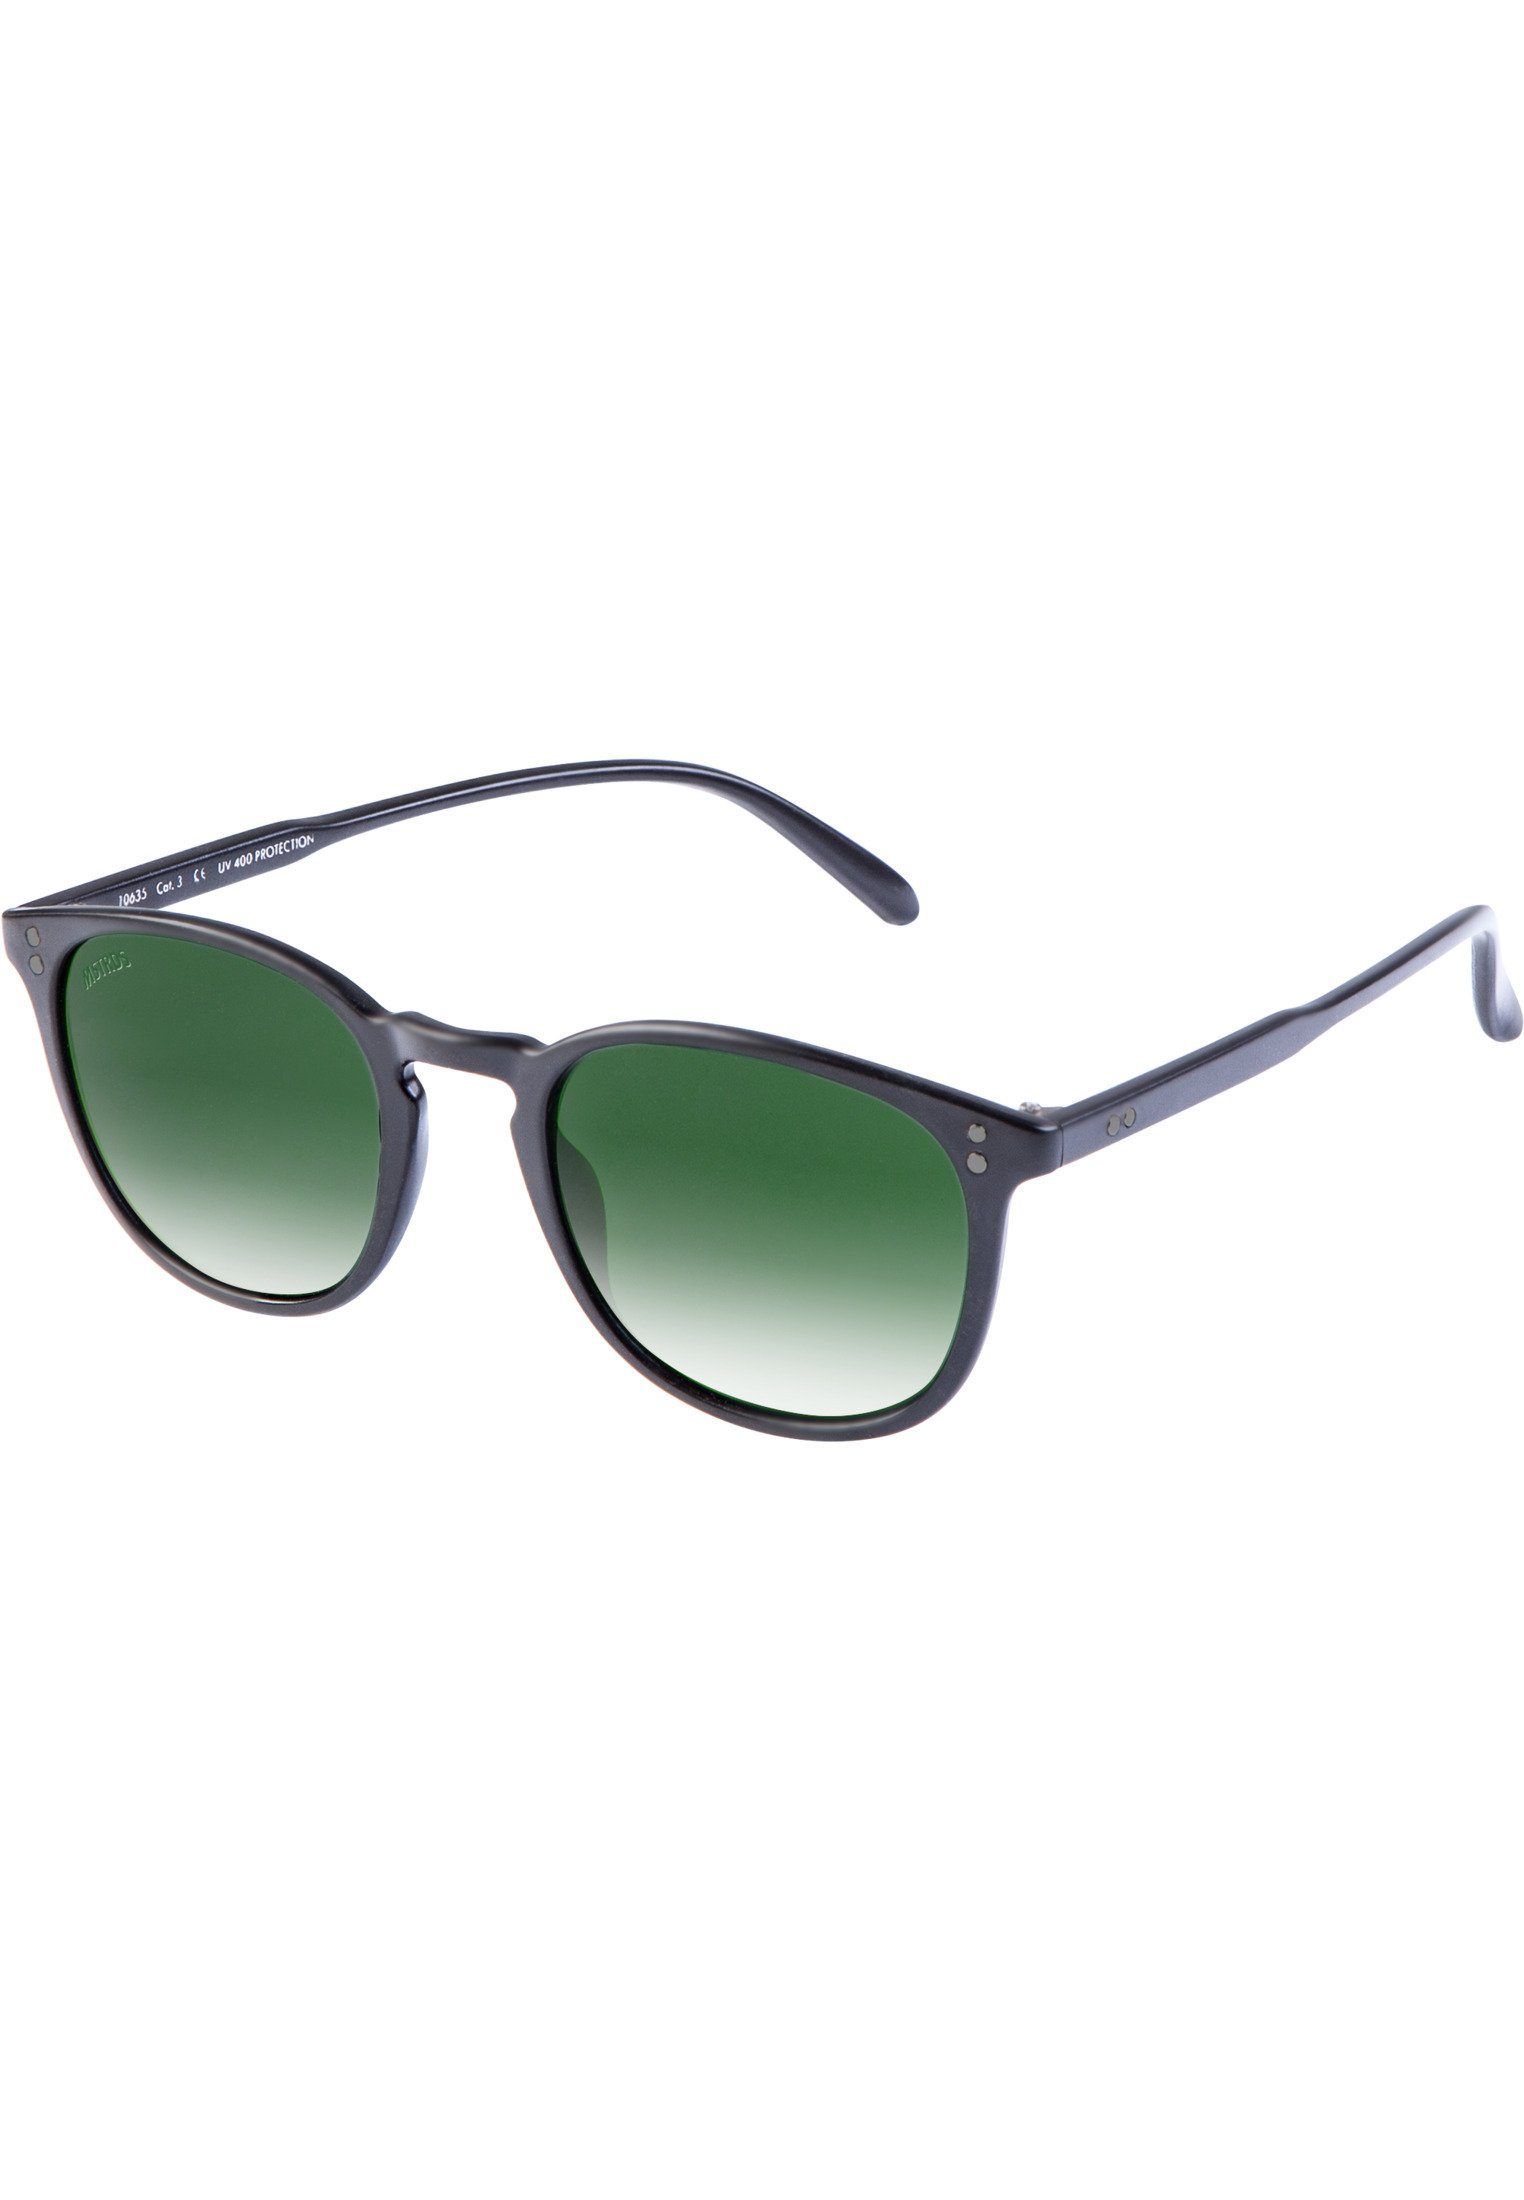 MSTRDS Sonnenbrille Accessoires Sunglasses blk/grn Youth Arthur